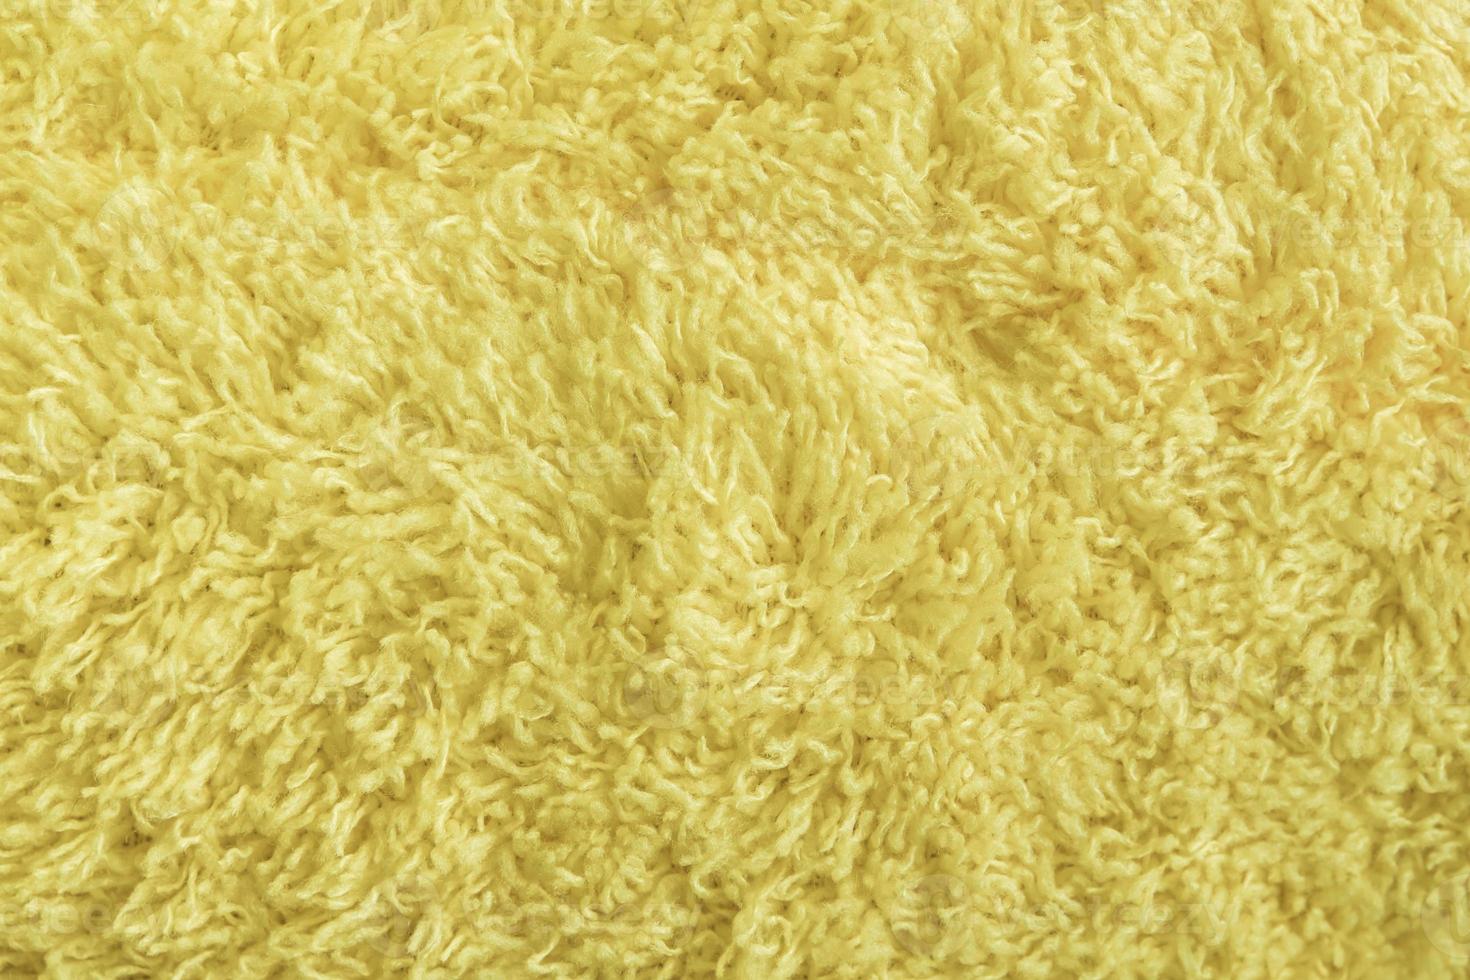 pelaje amarillo de la textura de la superficie de la tela foto